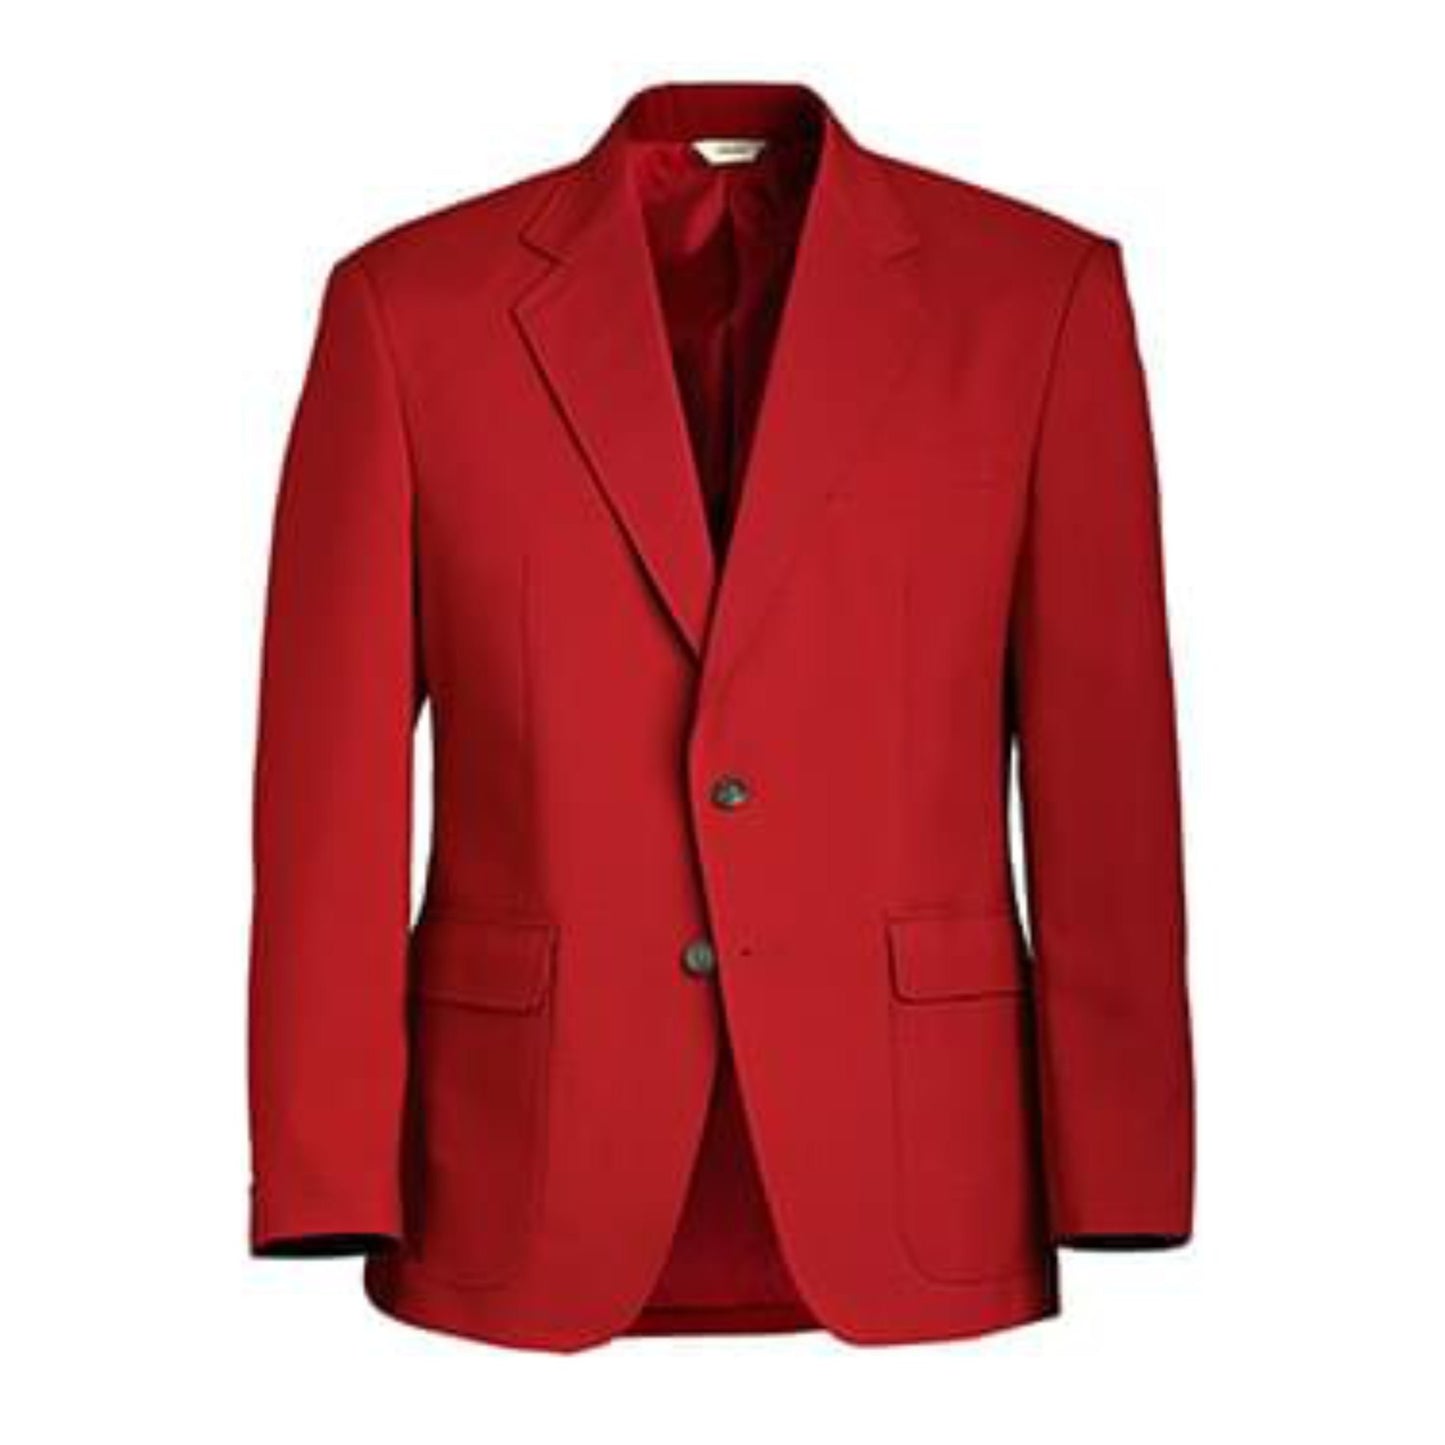 Essential Polyester Red Blazer